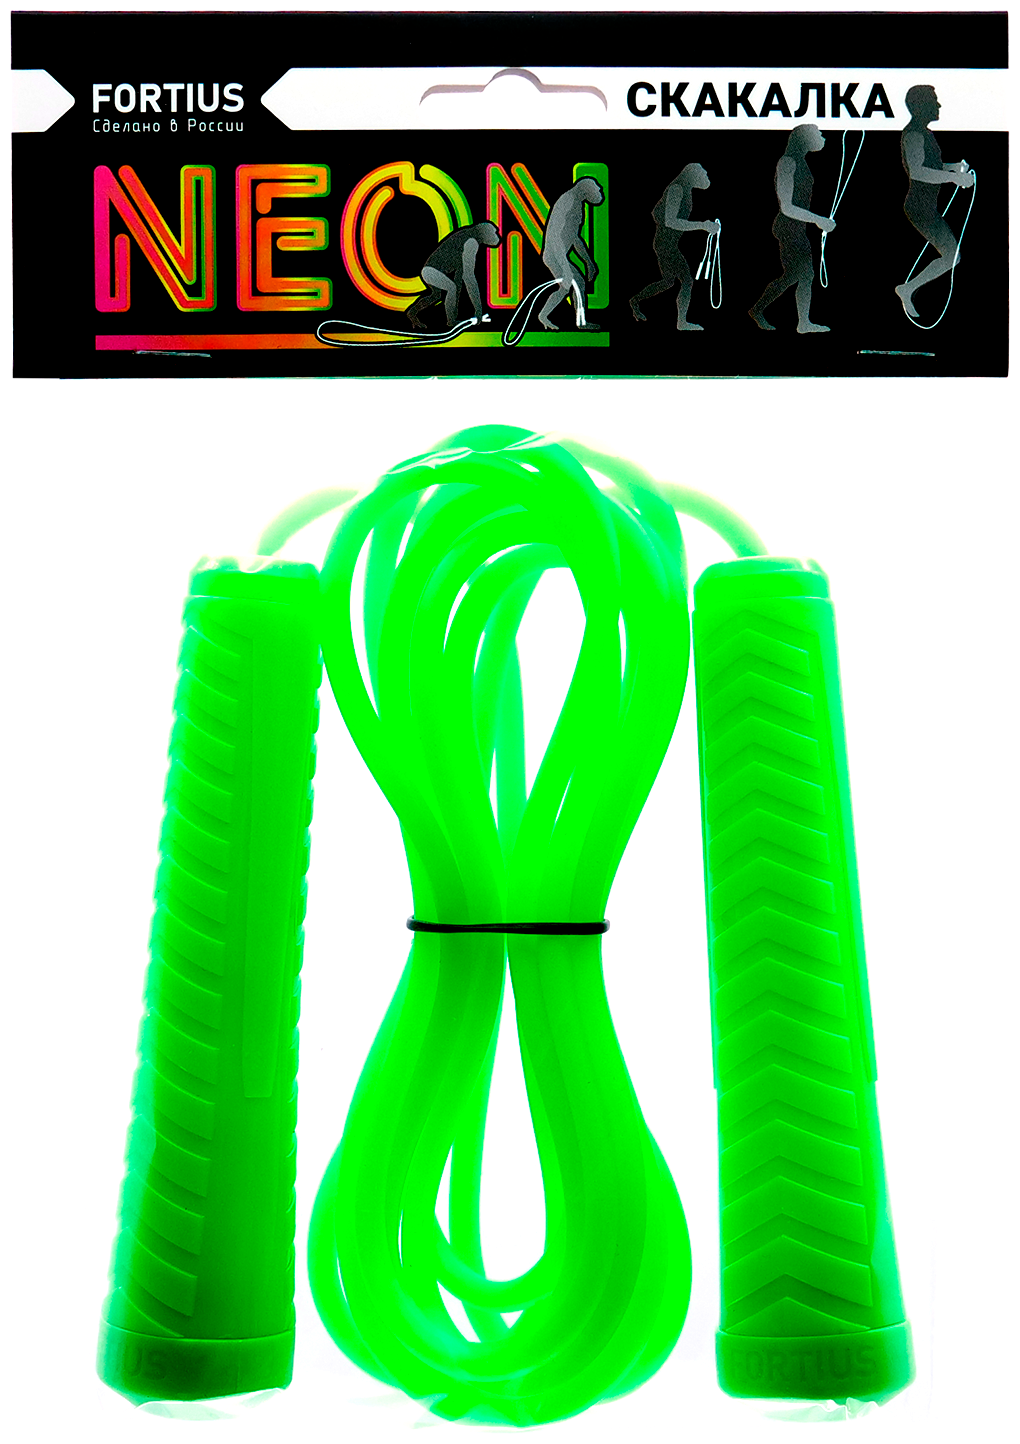 Скакалка "Fortius" Neon 3 м. (зеленая)